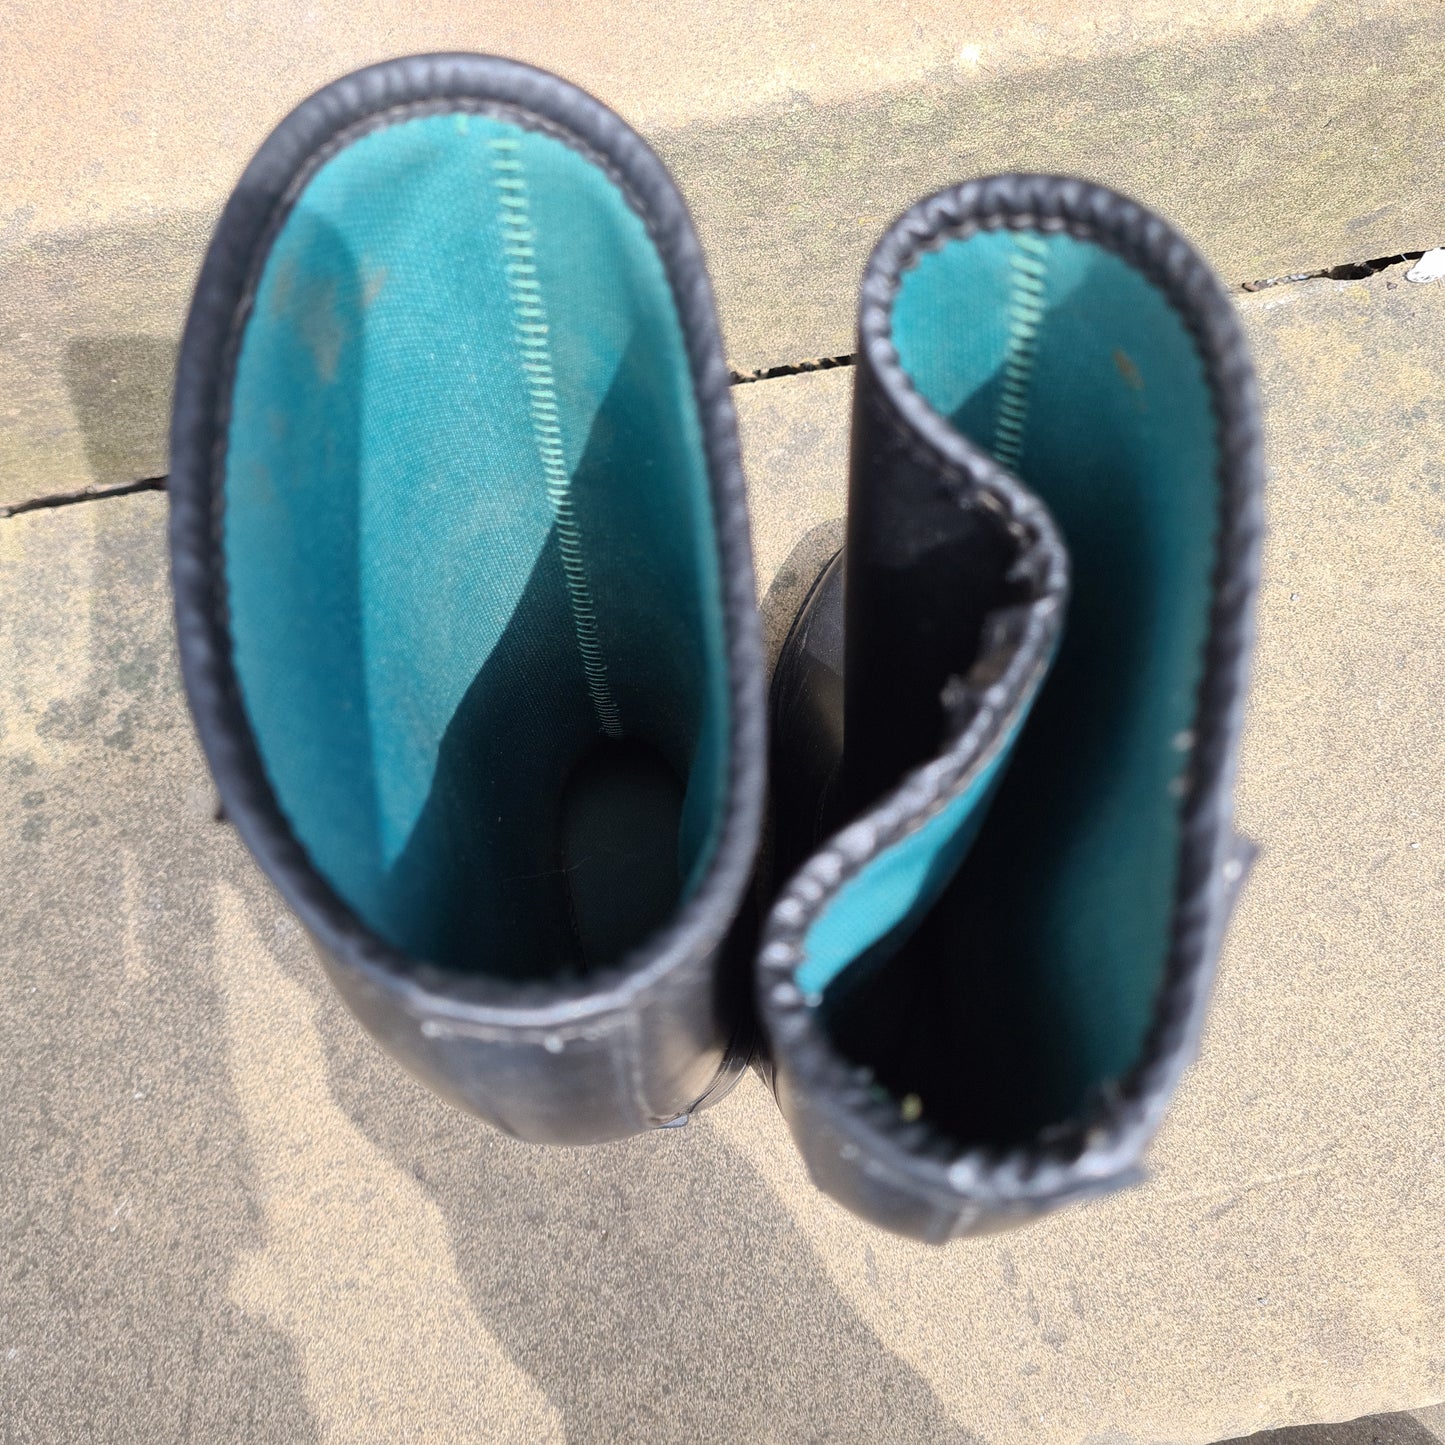 Black rubber Toggi long Jodhpur Boots FREE POSTAGE ❤️